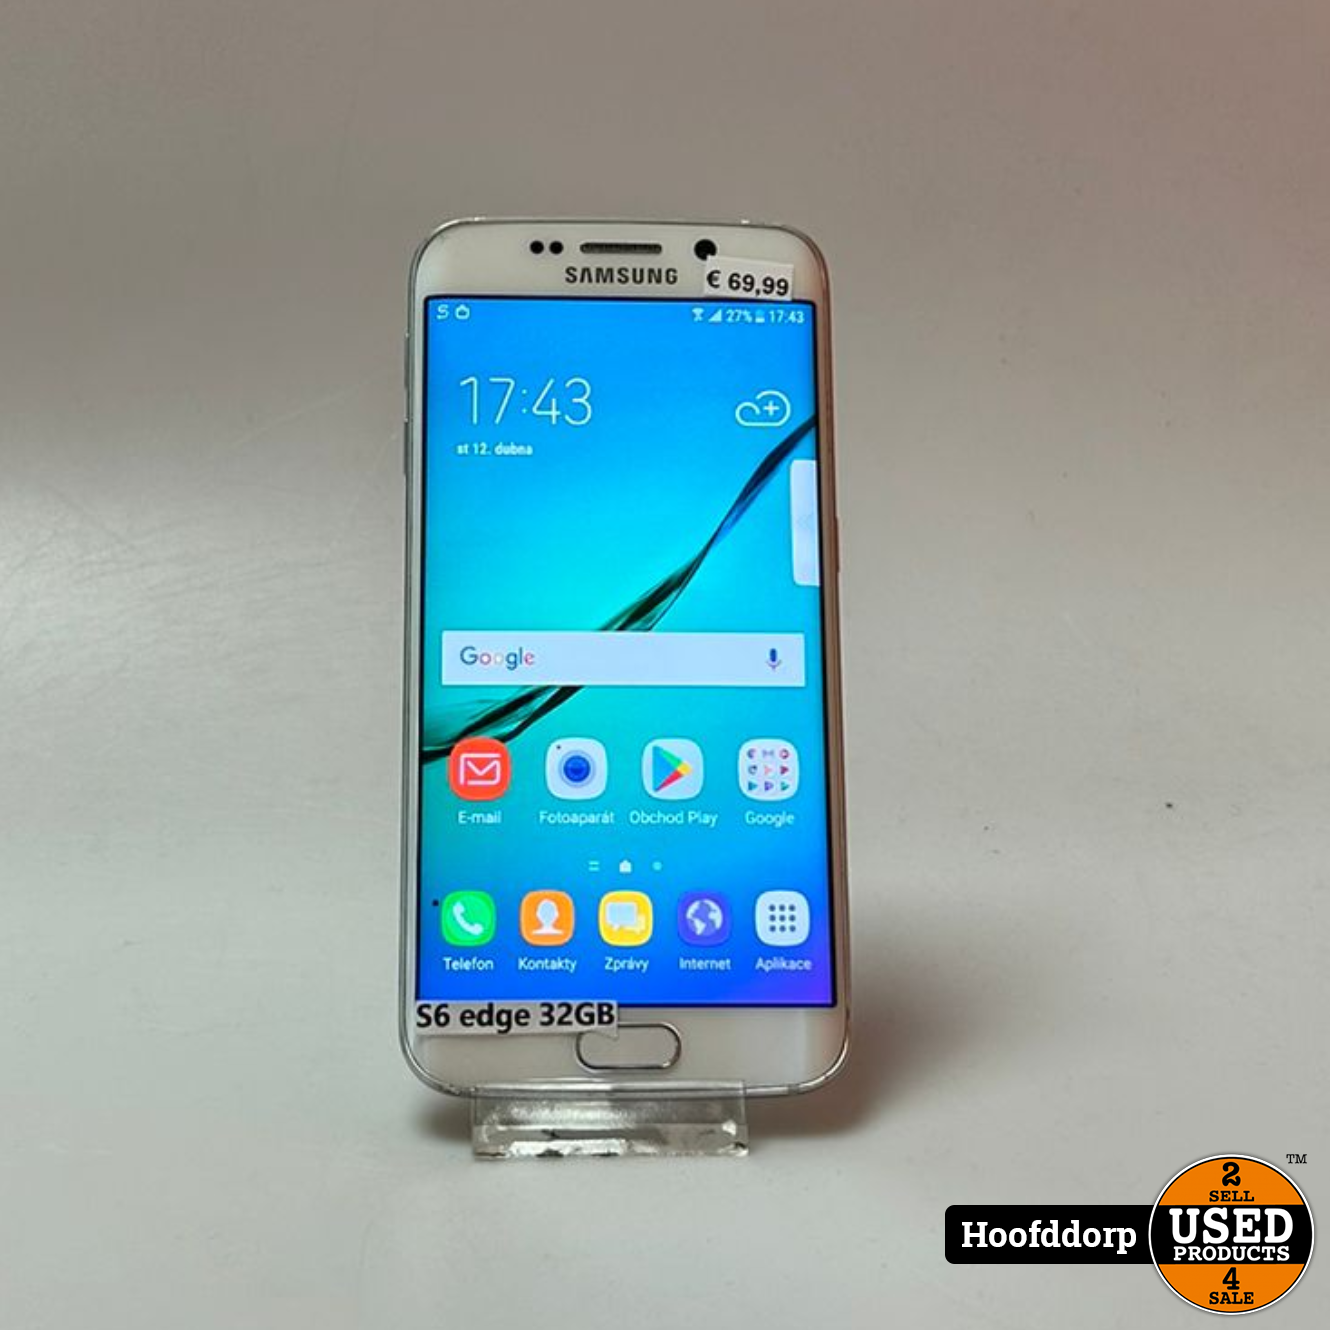 Voorafgaan achterstalligheid drinken Samsung Galaxy S6 Edge White - Used Products Hoofddorp